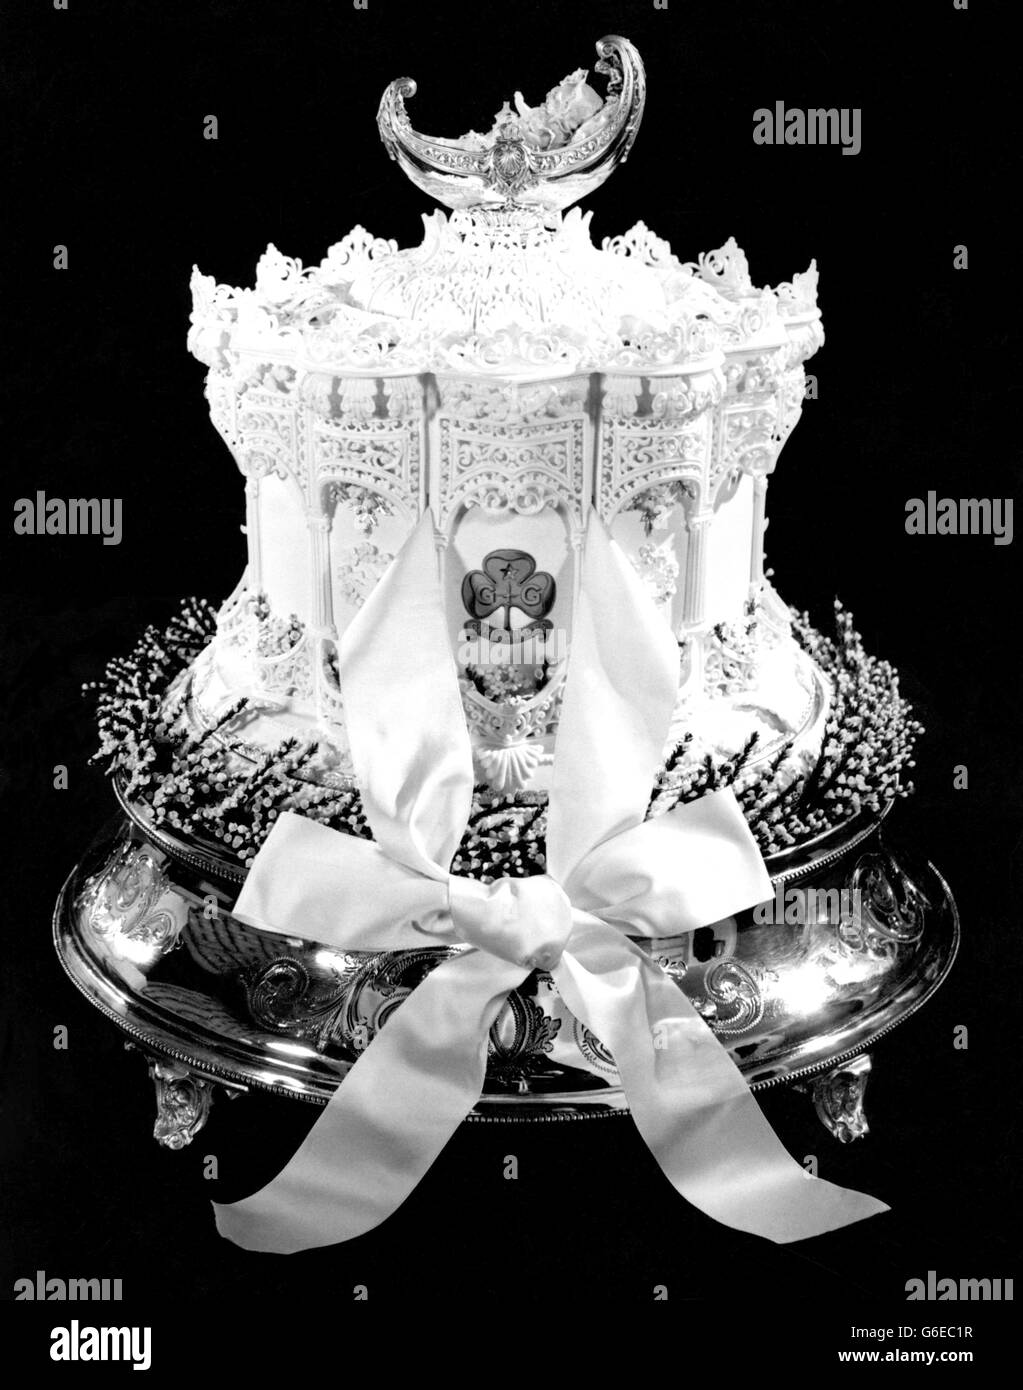 Slice of Princess Diana's 1981 wedding cake sells for $2,500